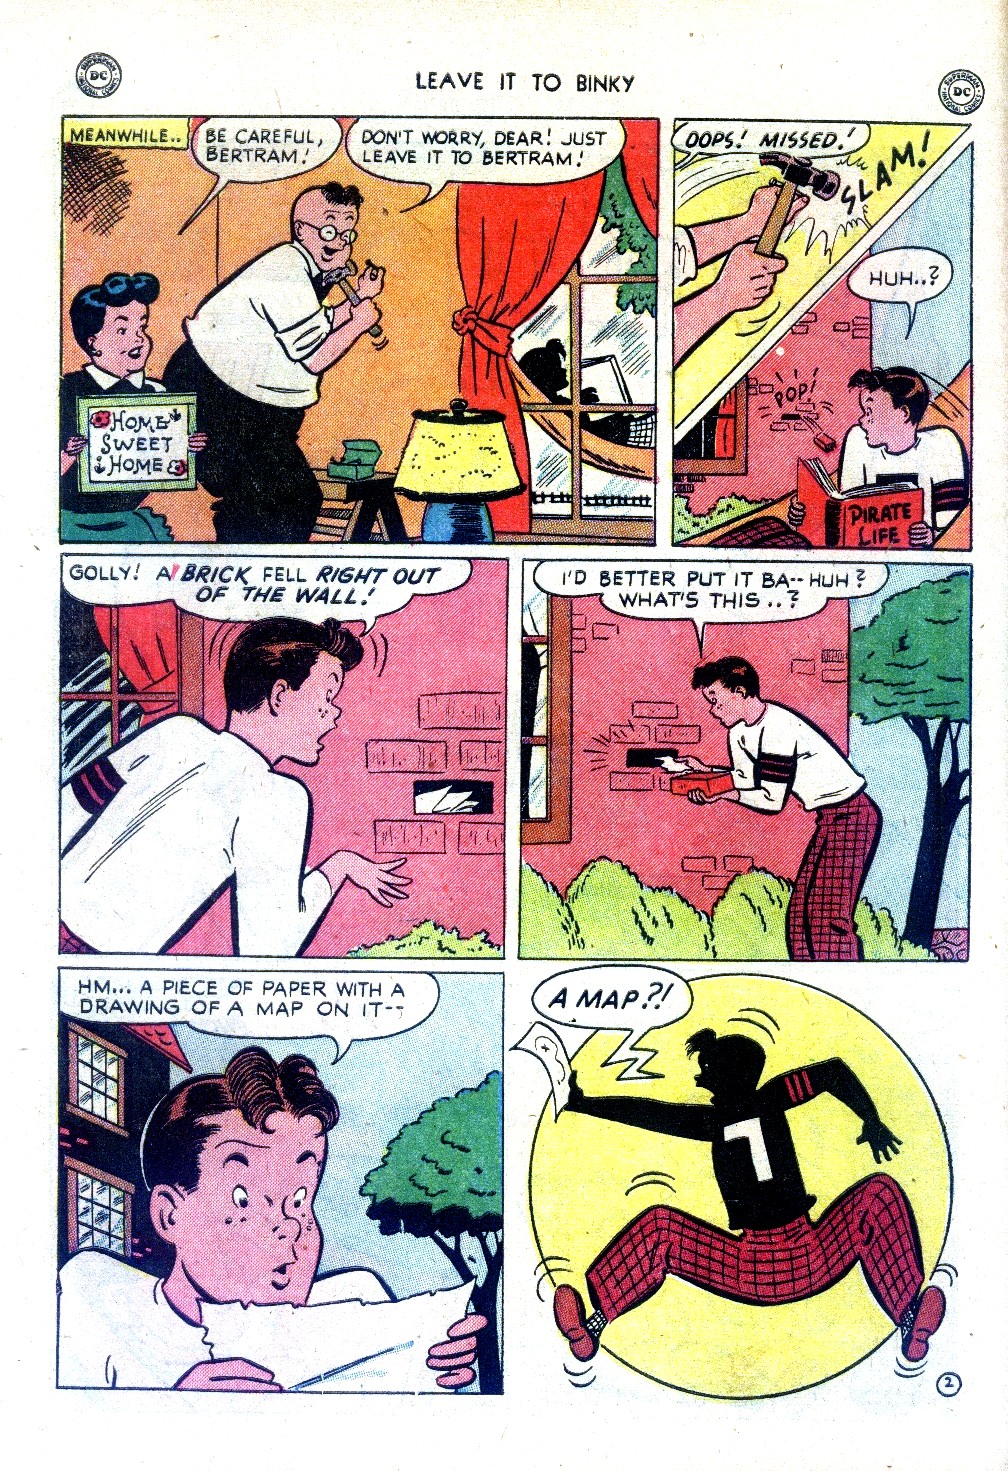 Read online Leave it to Binky comic -  Issue #17 - 14